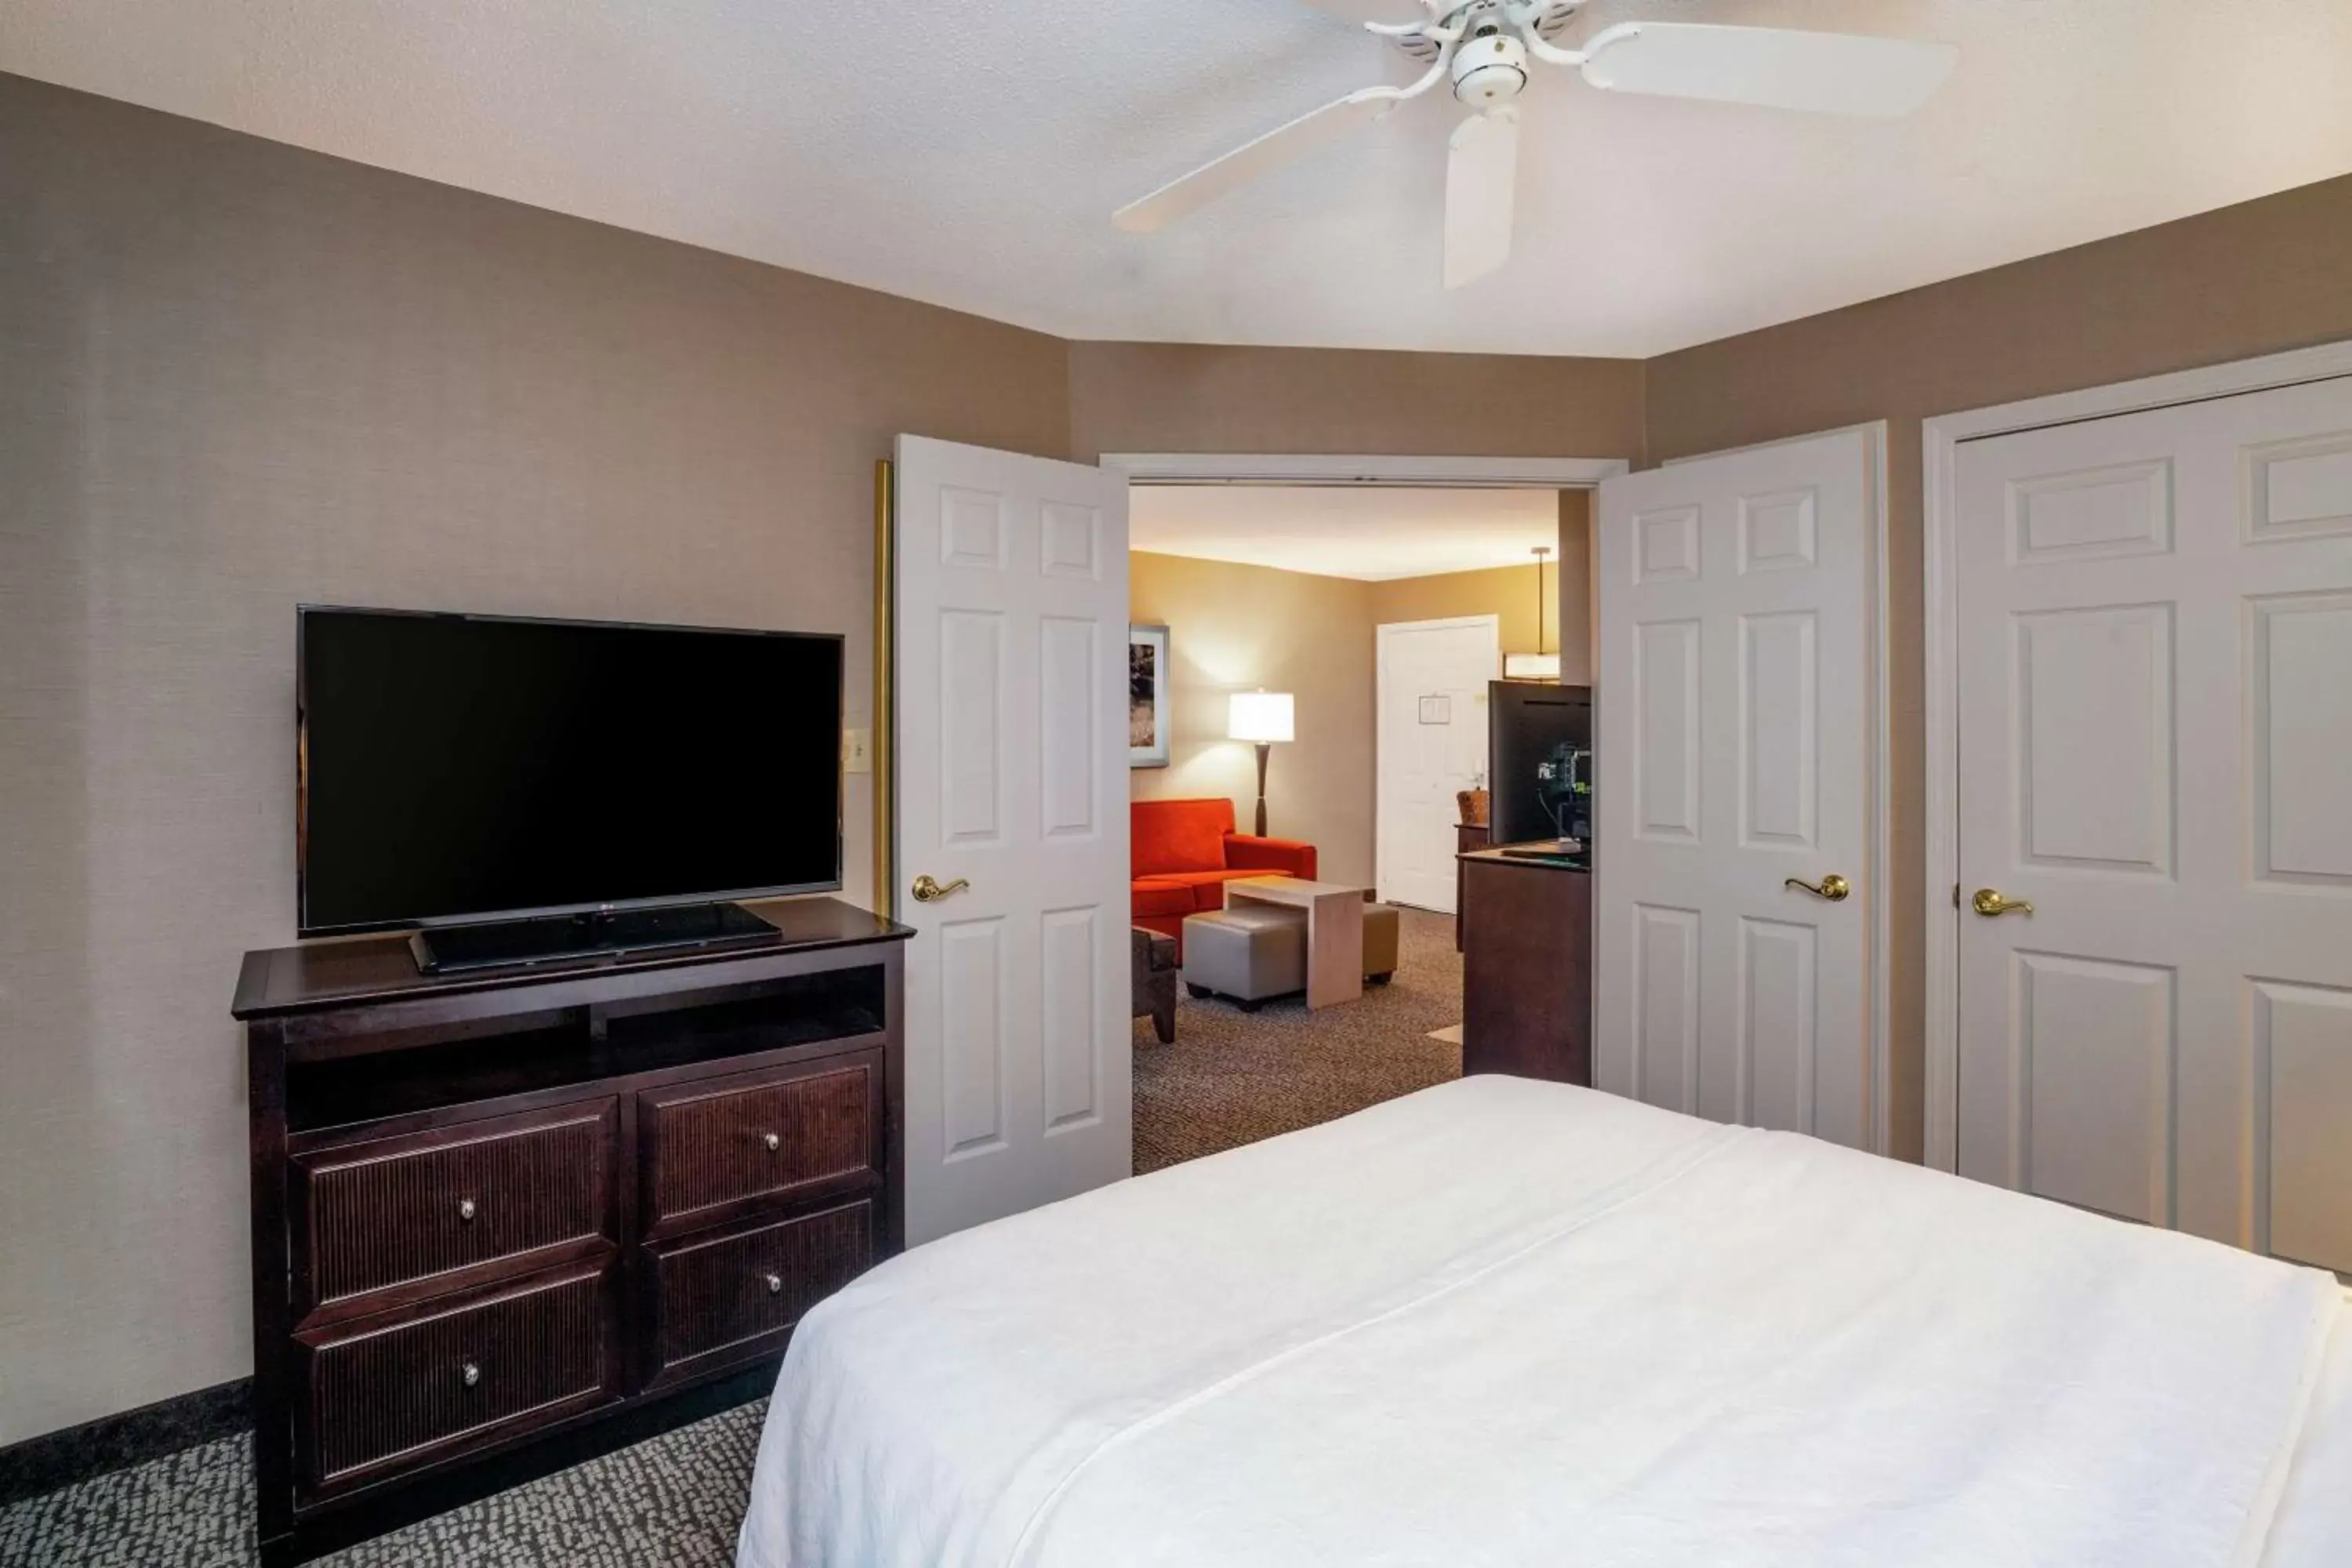 Bedroom, TV/Entertainment Center in Homewood Suites Lafayette